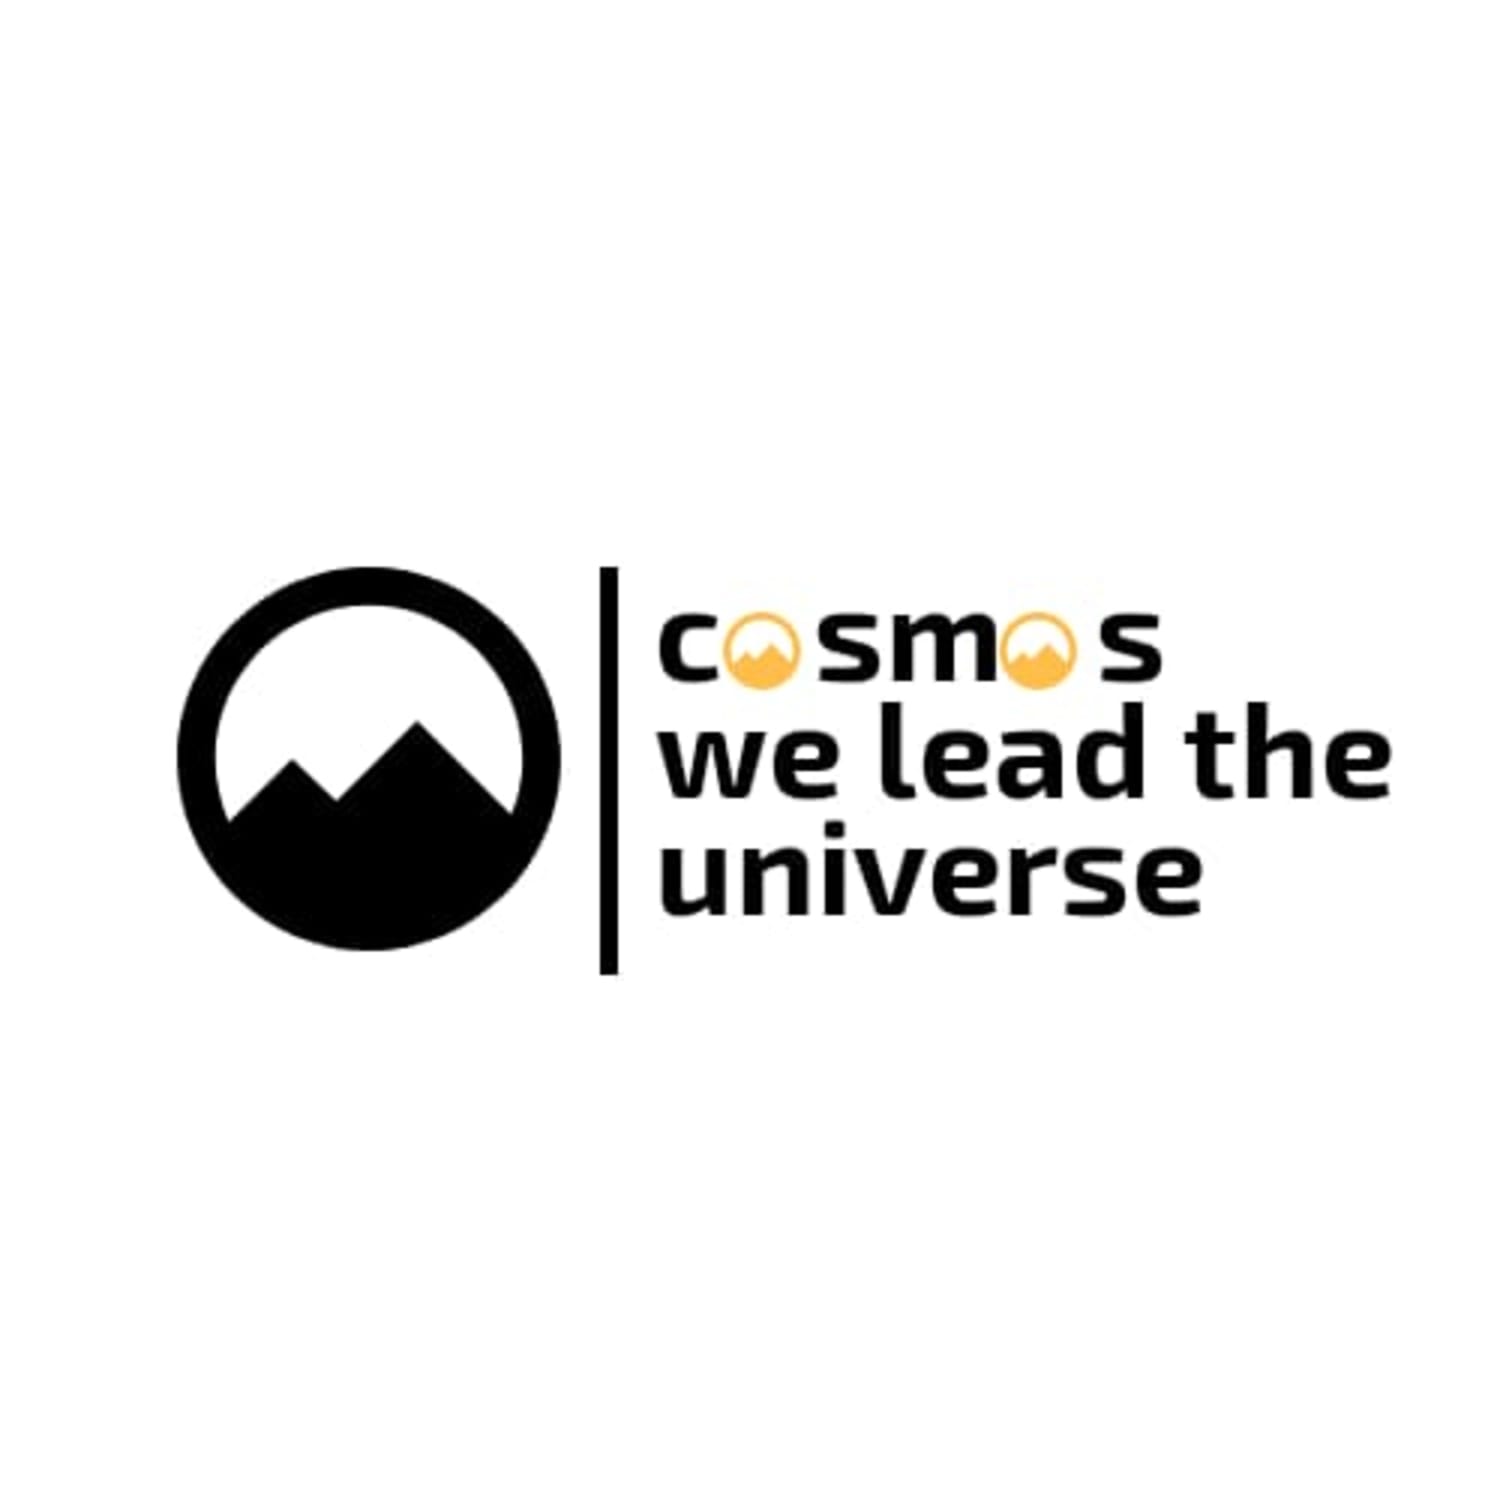 Cosmos Organisation